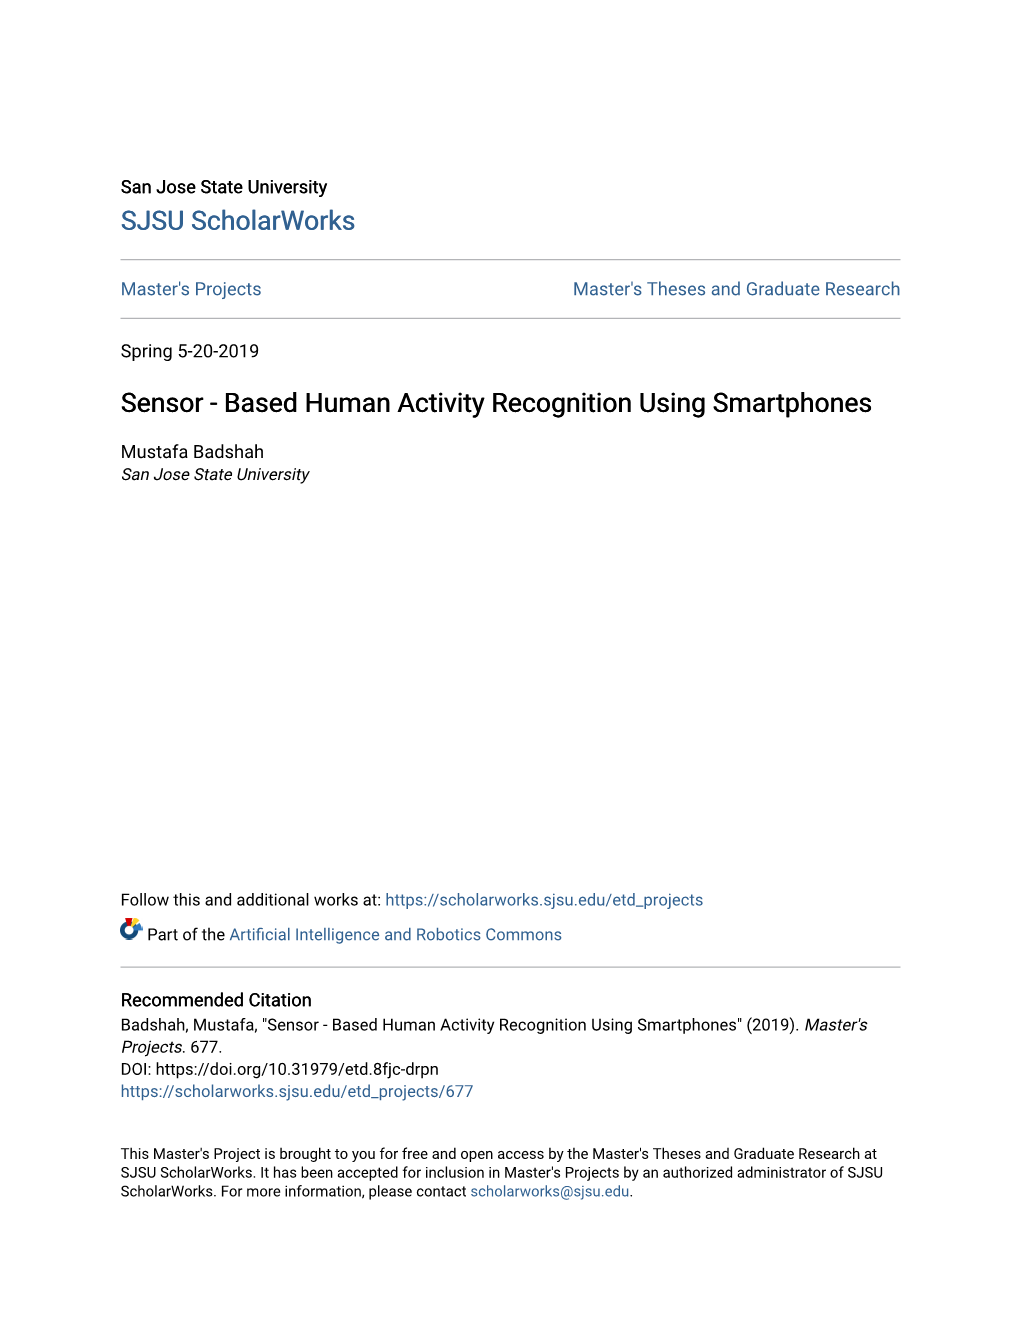 Sensor - Based Human Activity Recognition Using Smartphones